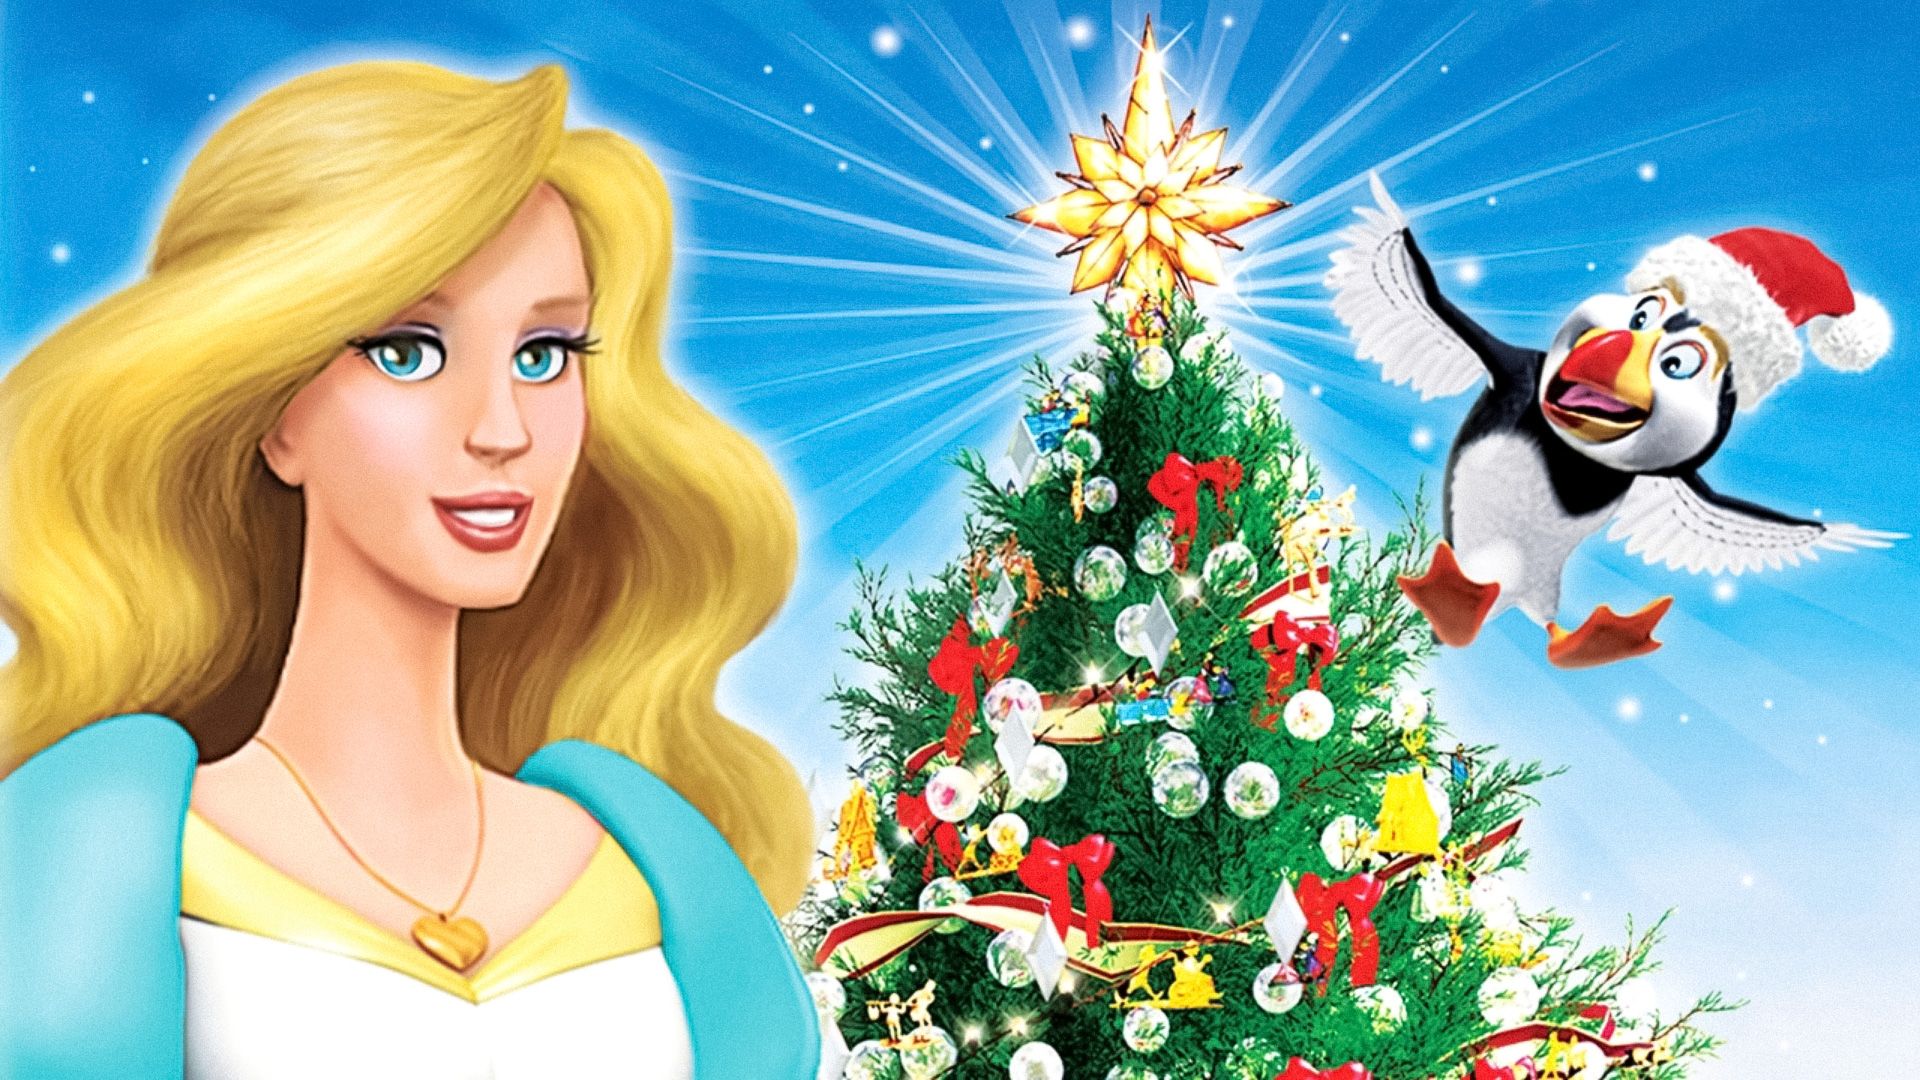 The Swan Princess: Christmas background